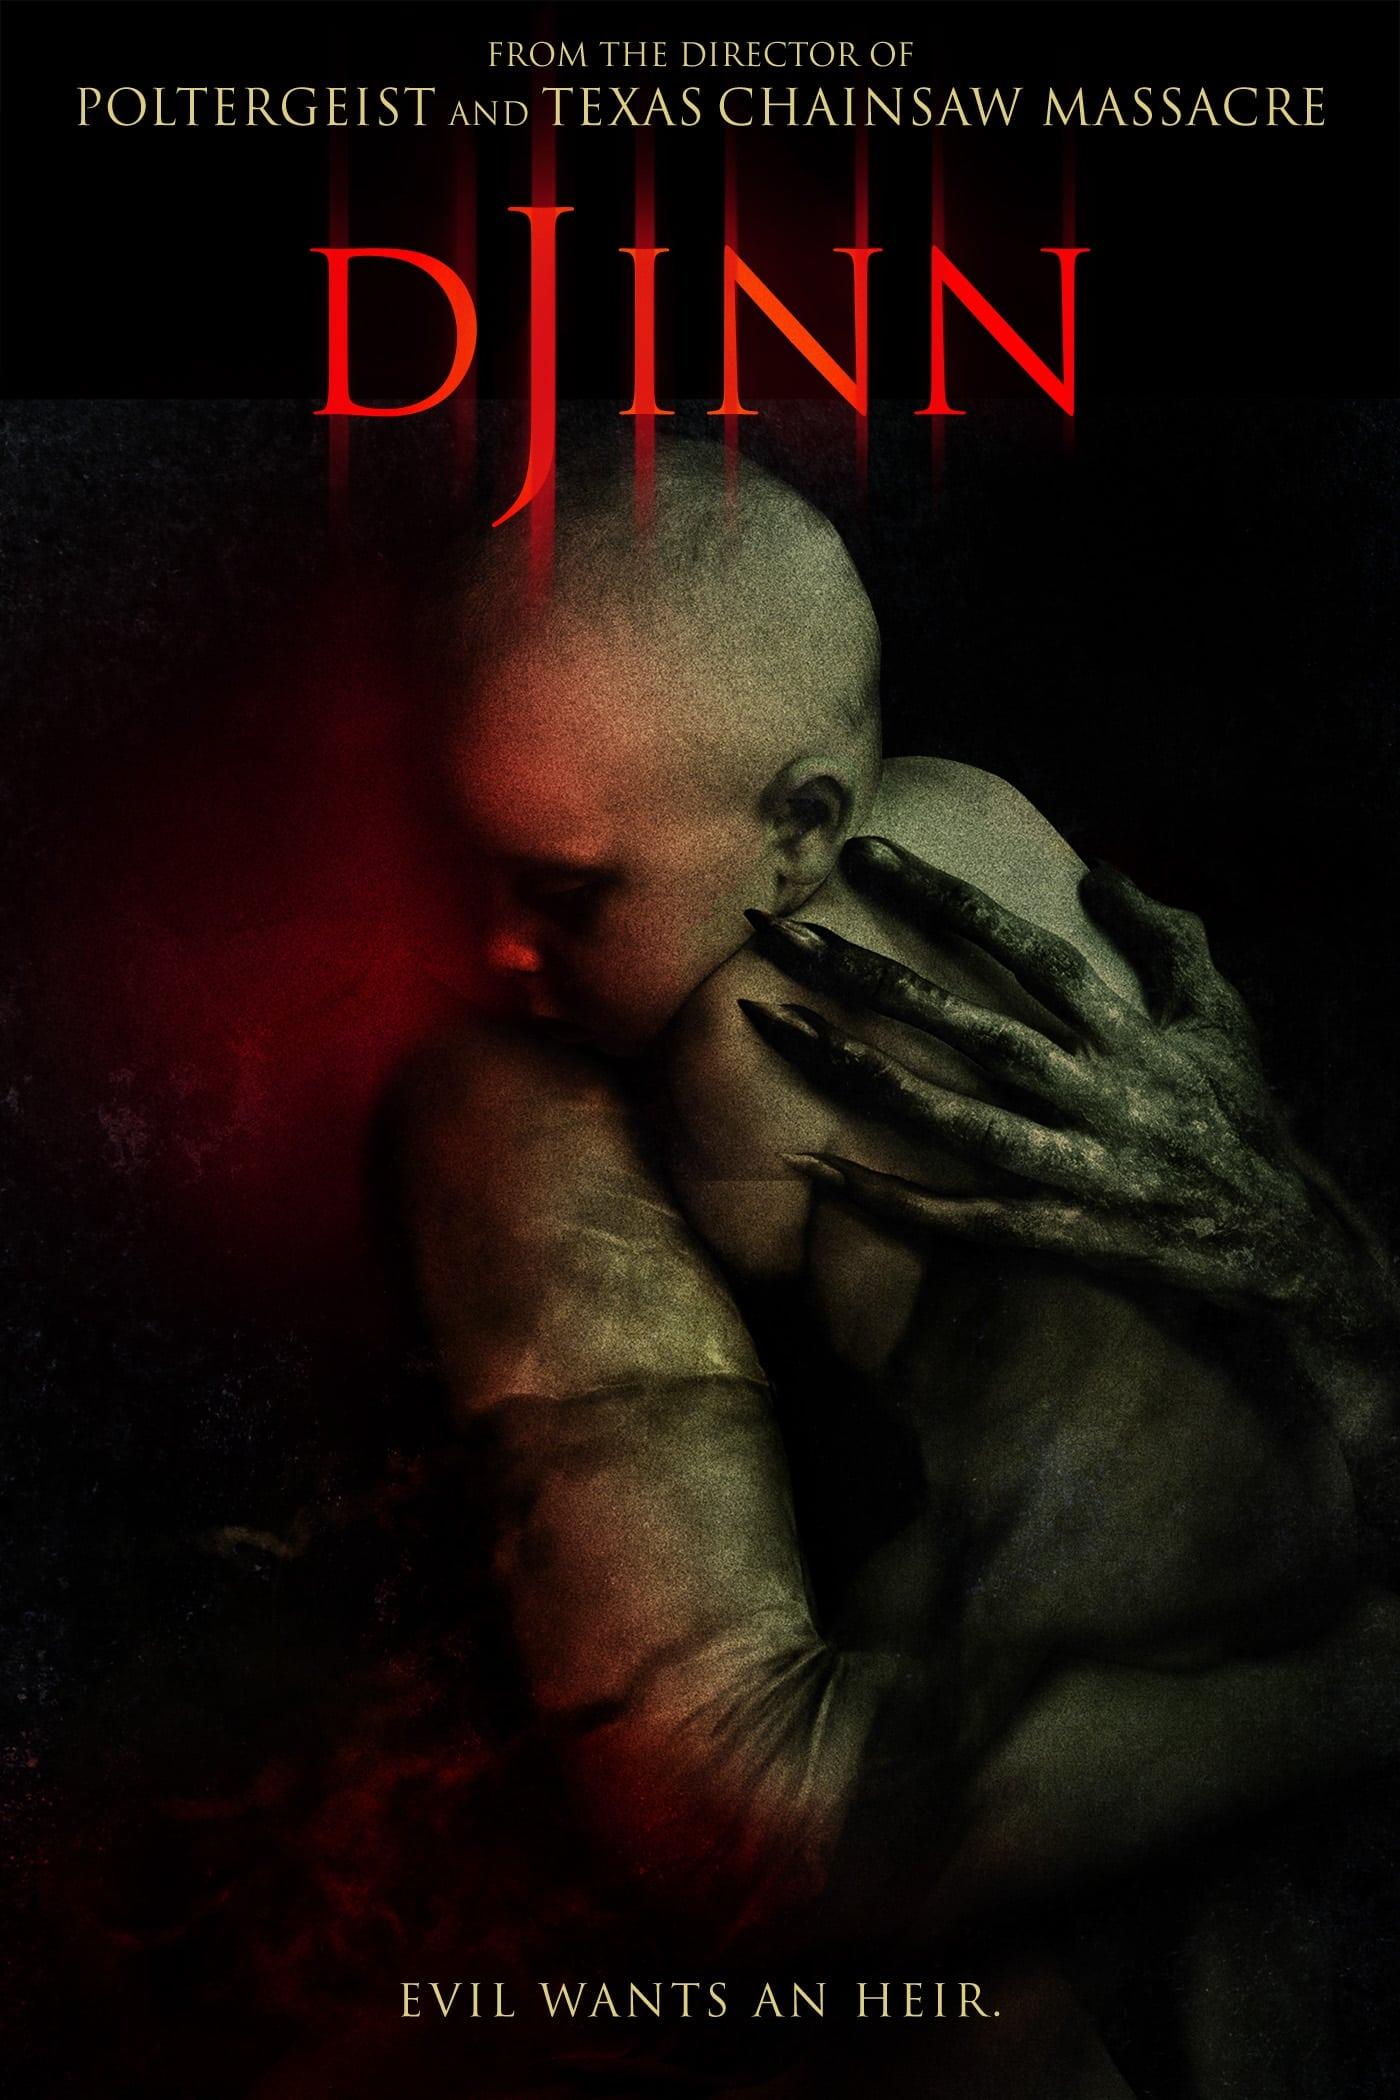 Djinn poster